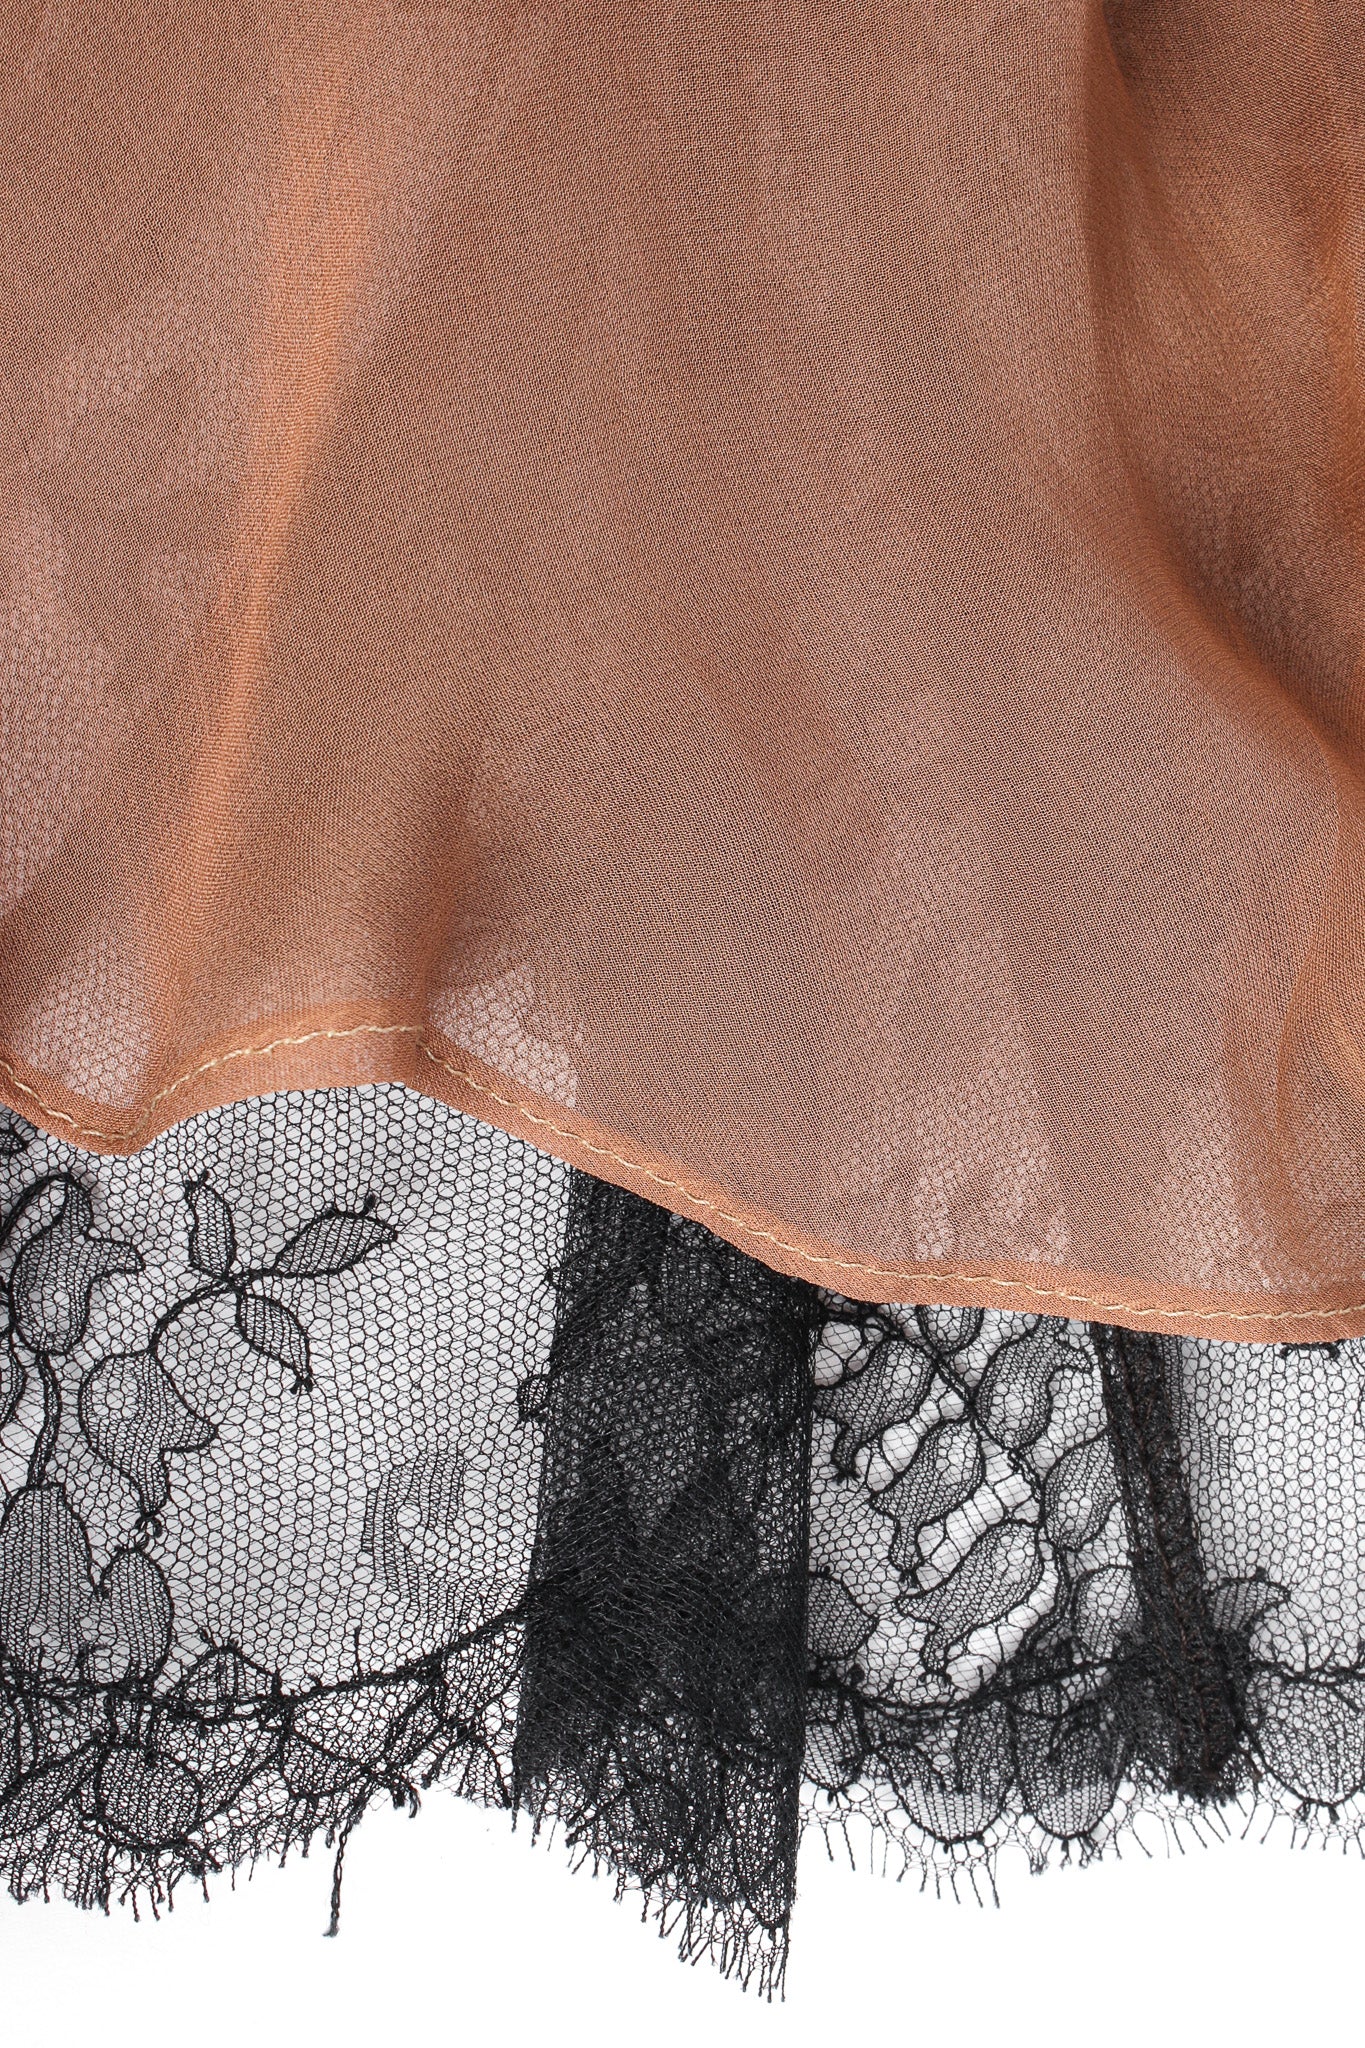 Vintage Oscar de la Renta Soutache Chantilly Lace Ruffle Dress hem/lining @ Recess LA